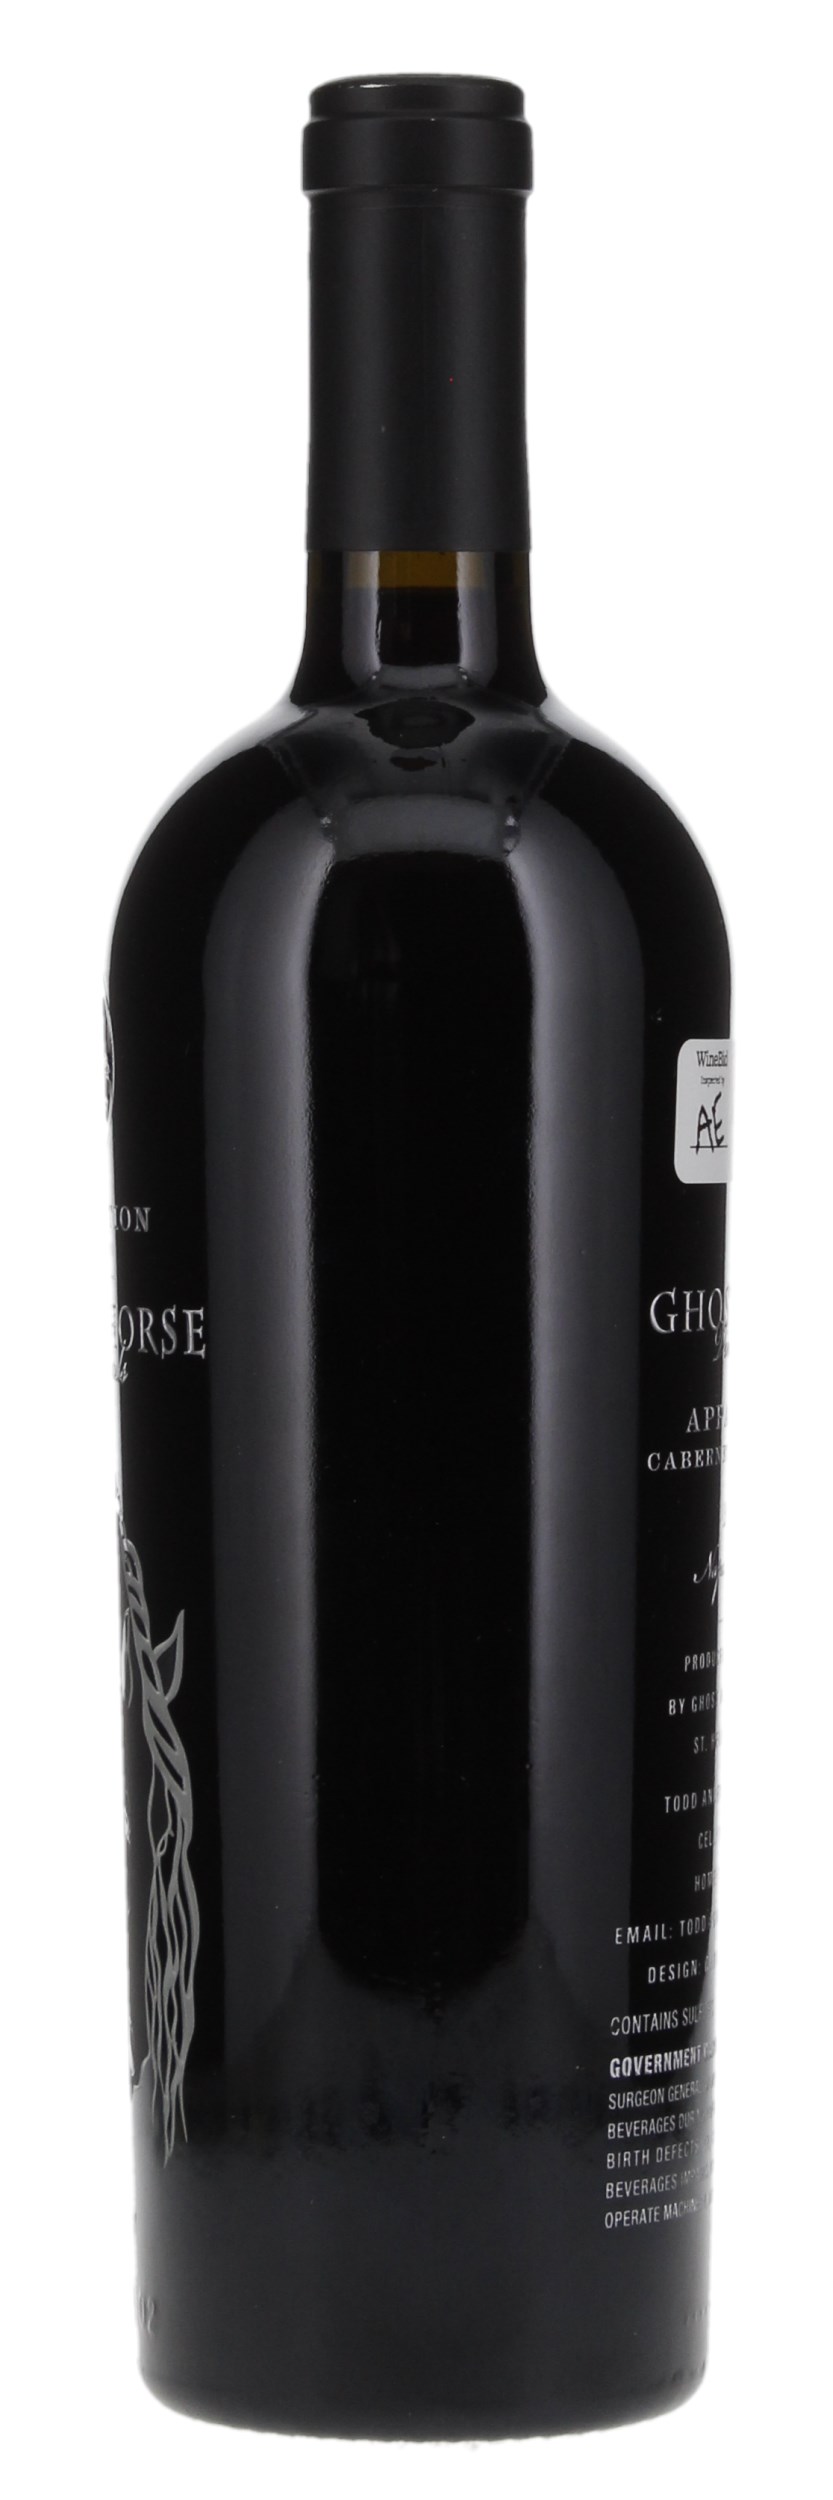 2010 Ghost Horse Vineyard Apparition Cabernet Sauvignon, 750ml